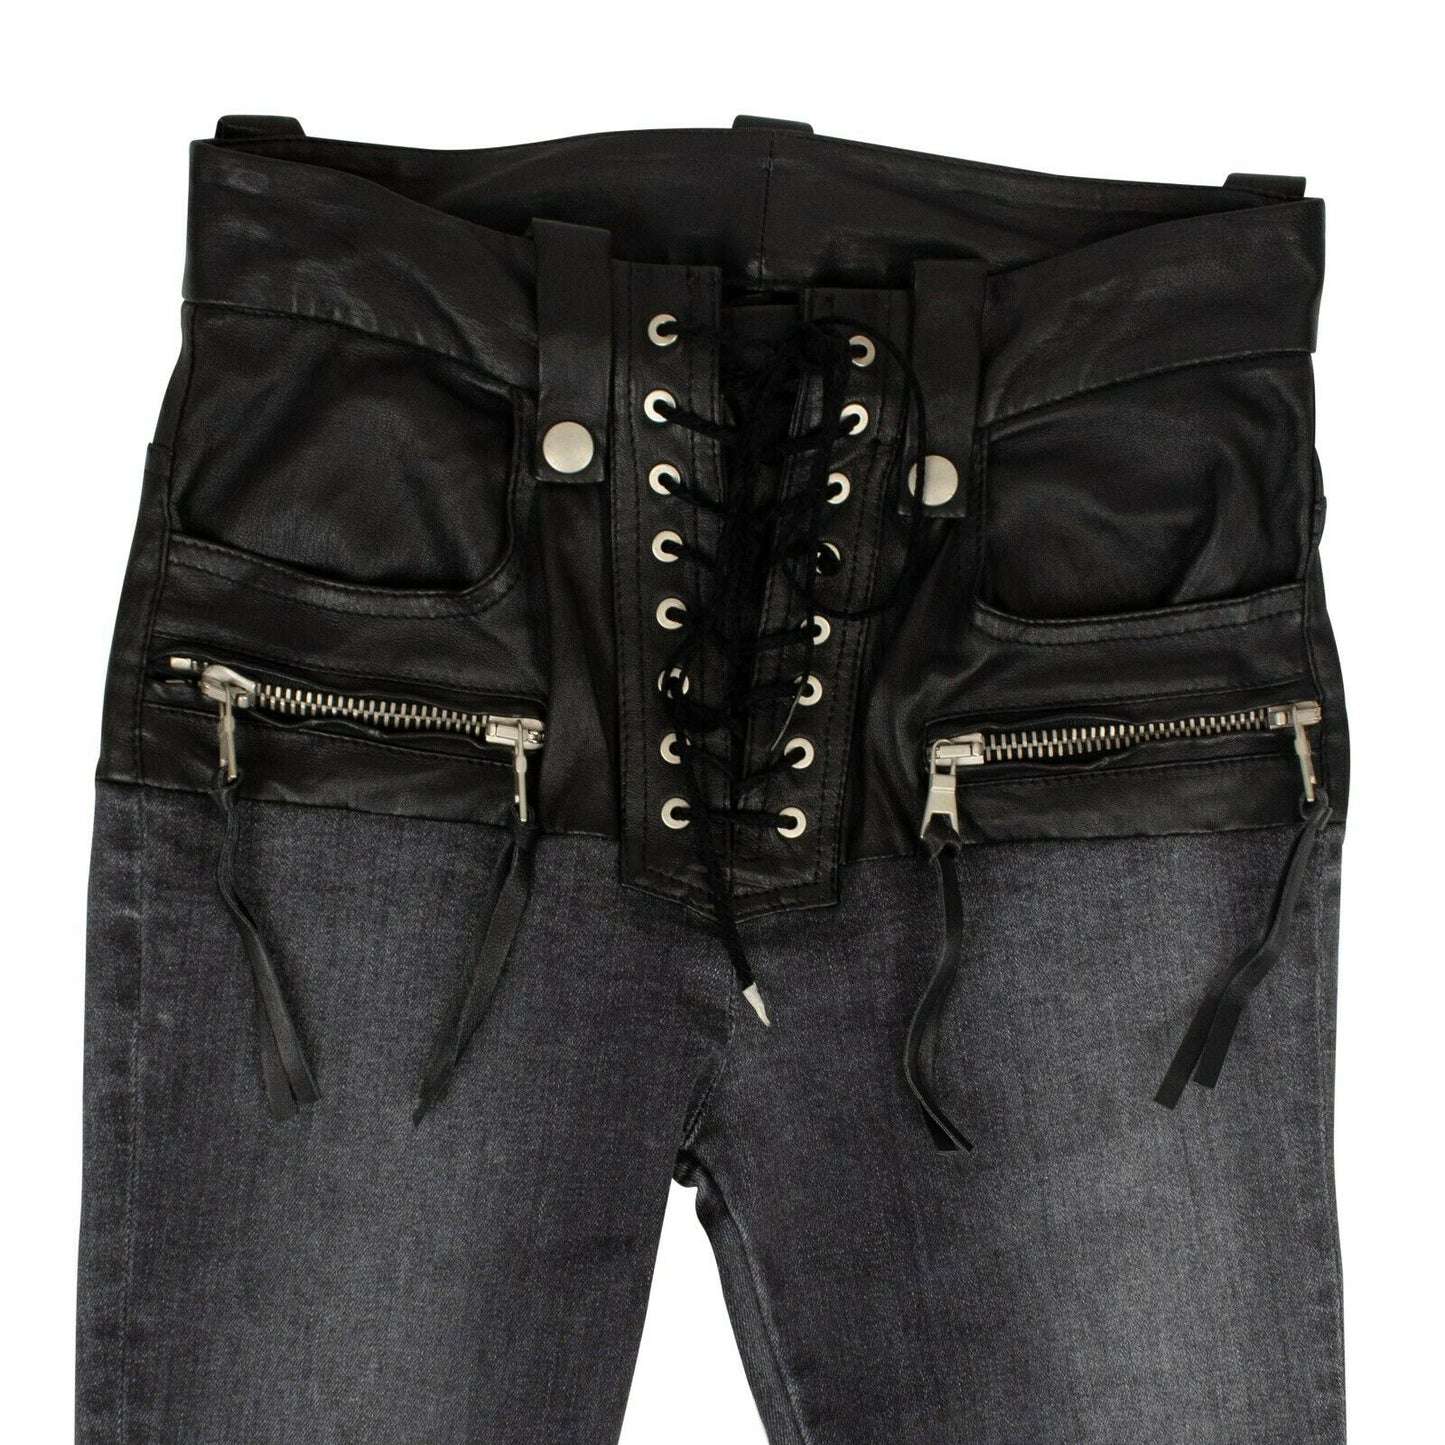 Unravel Project Stonewash Lace Up Skinny Jean Pants - Black